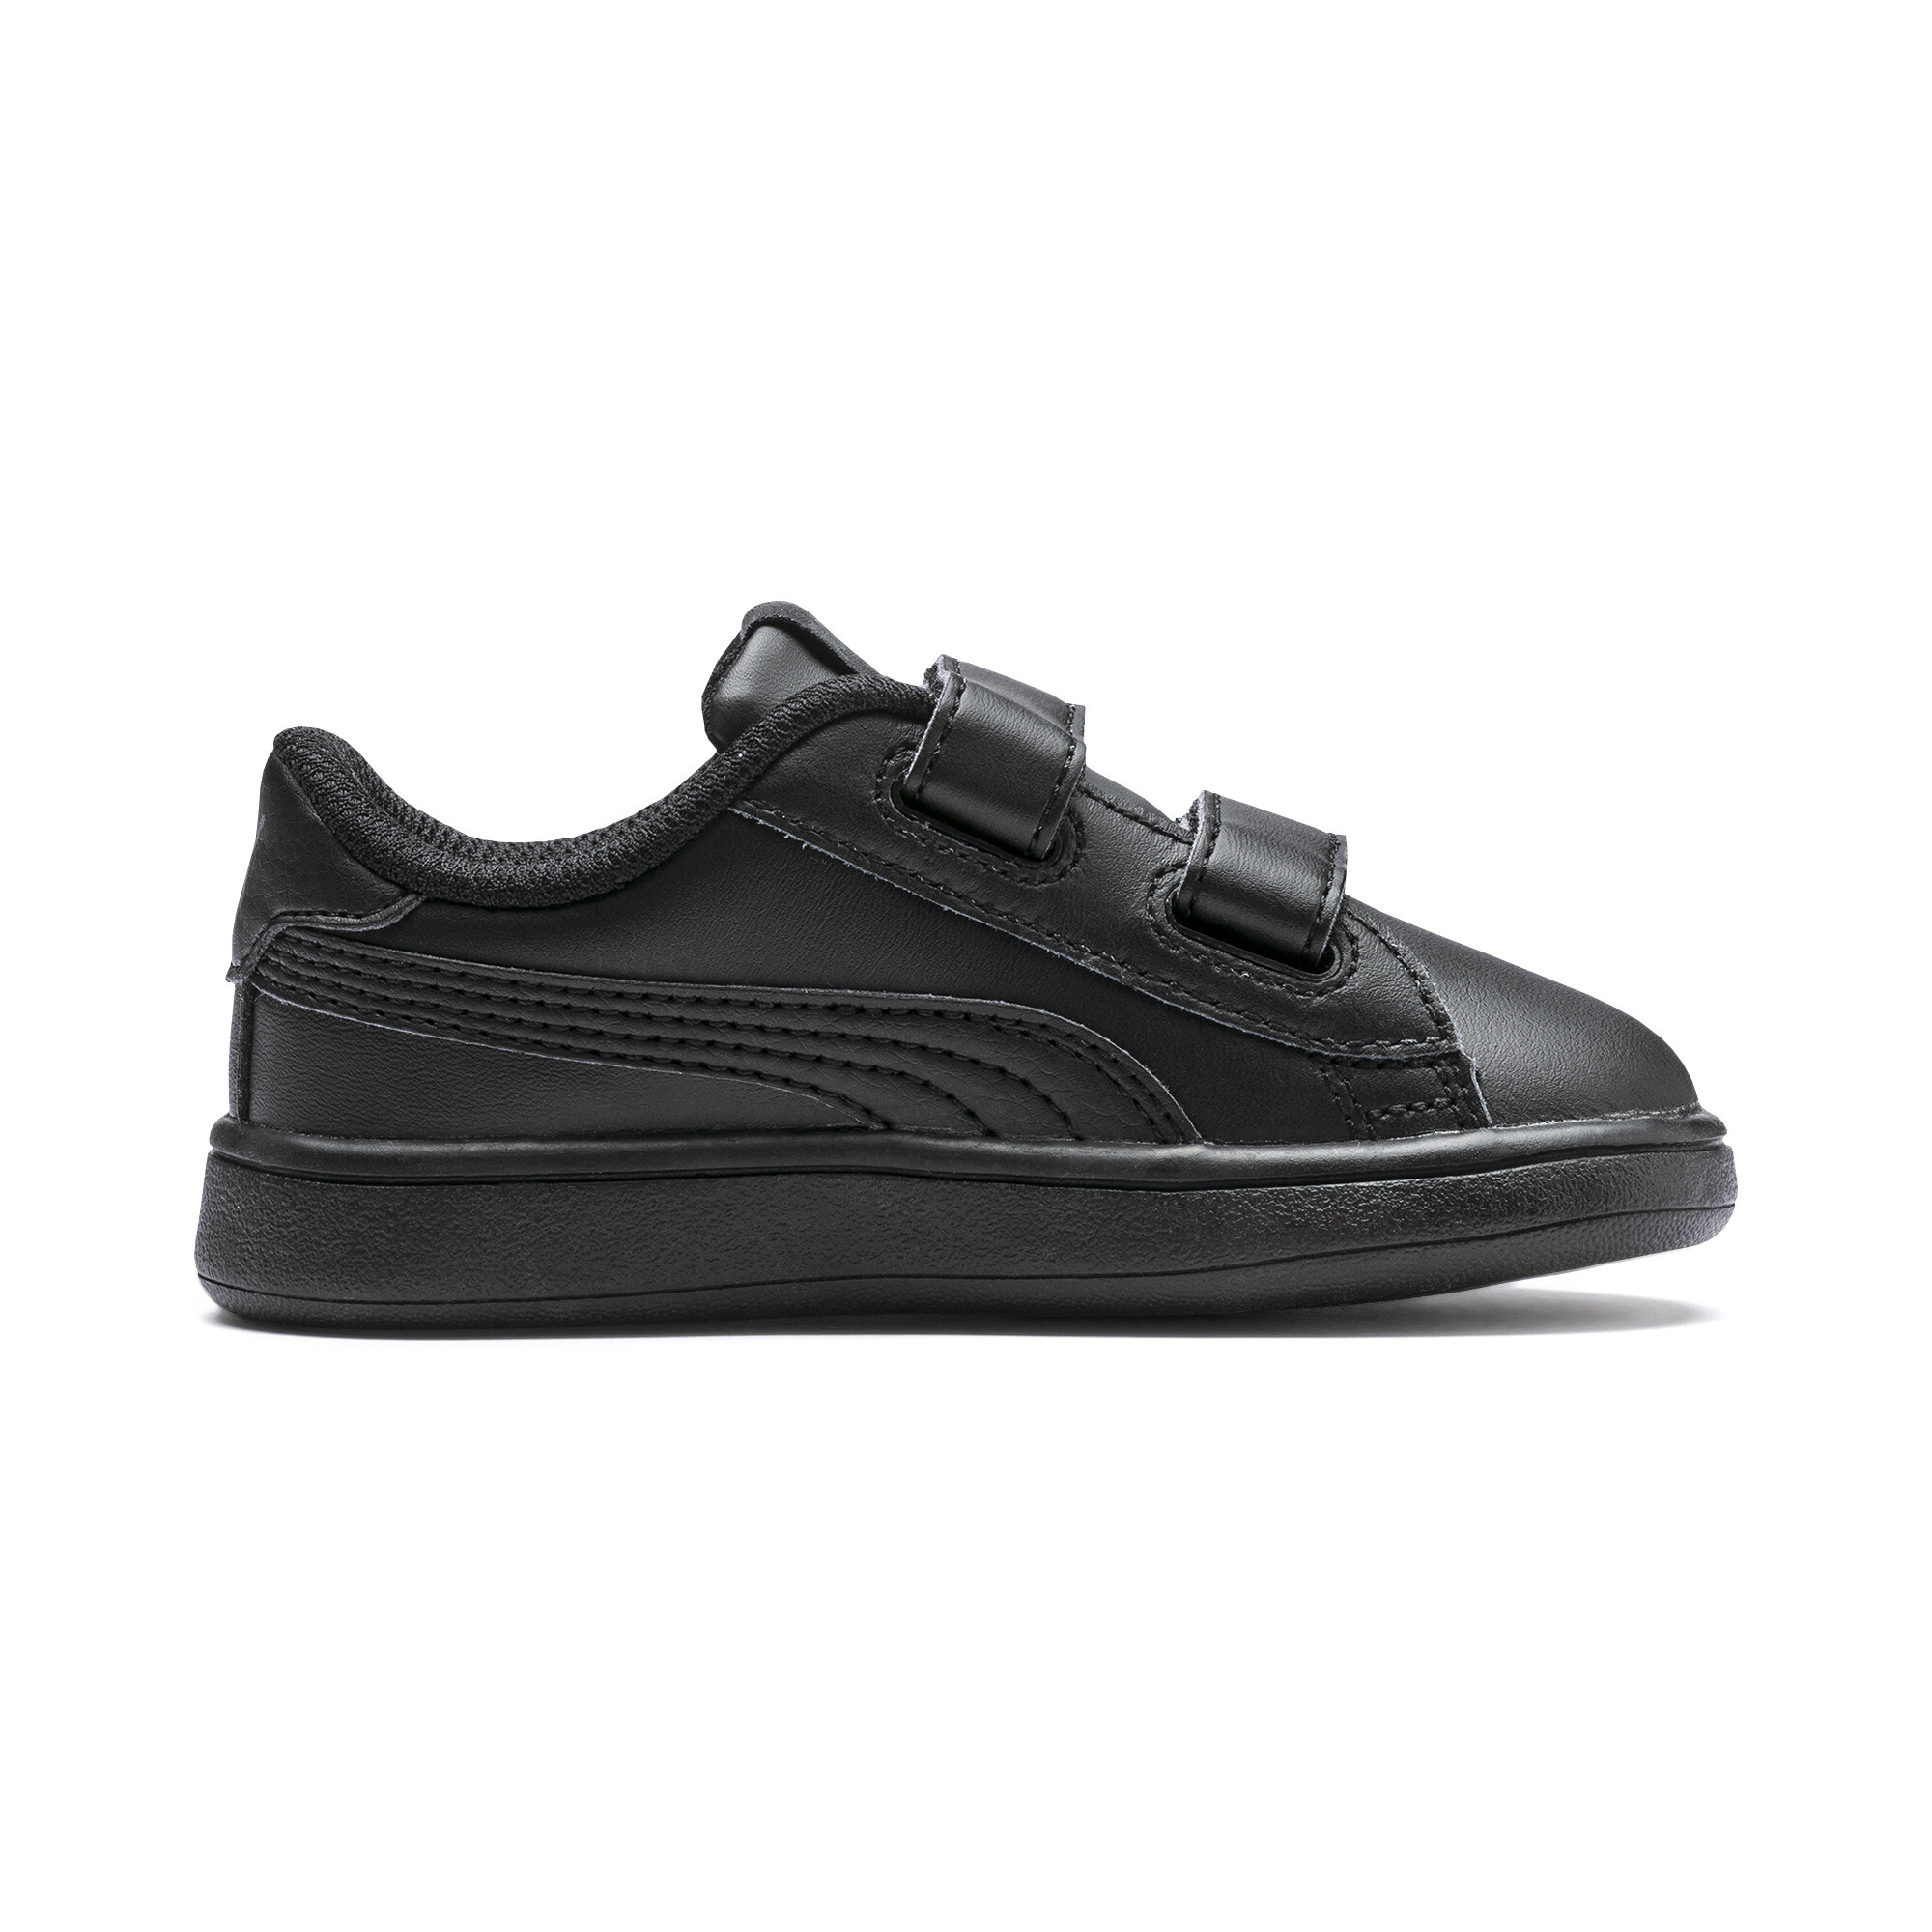 Kids' PUMA Smash V2 Trainers Shoes In Black, Size EU 21